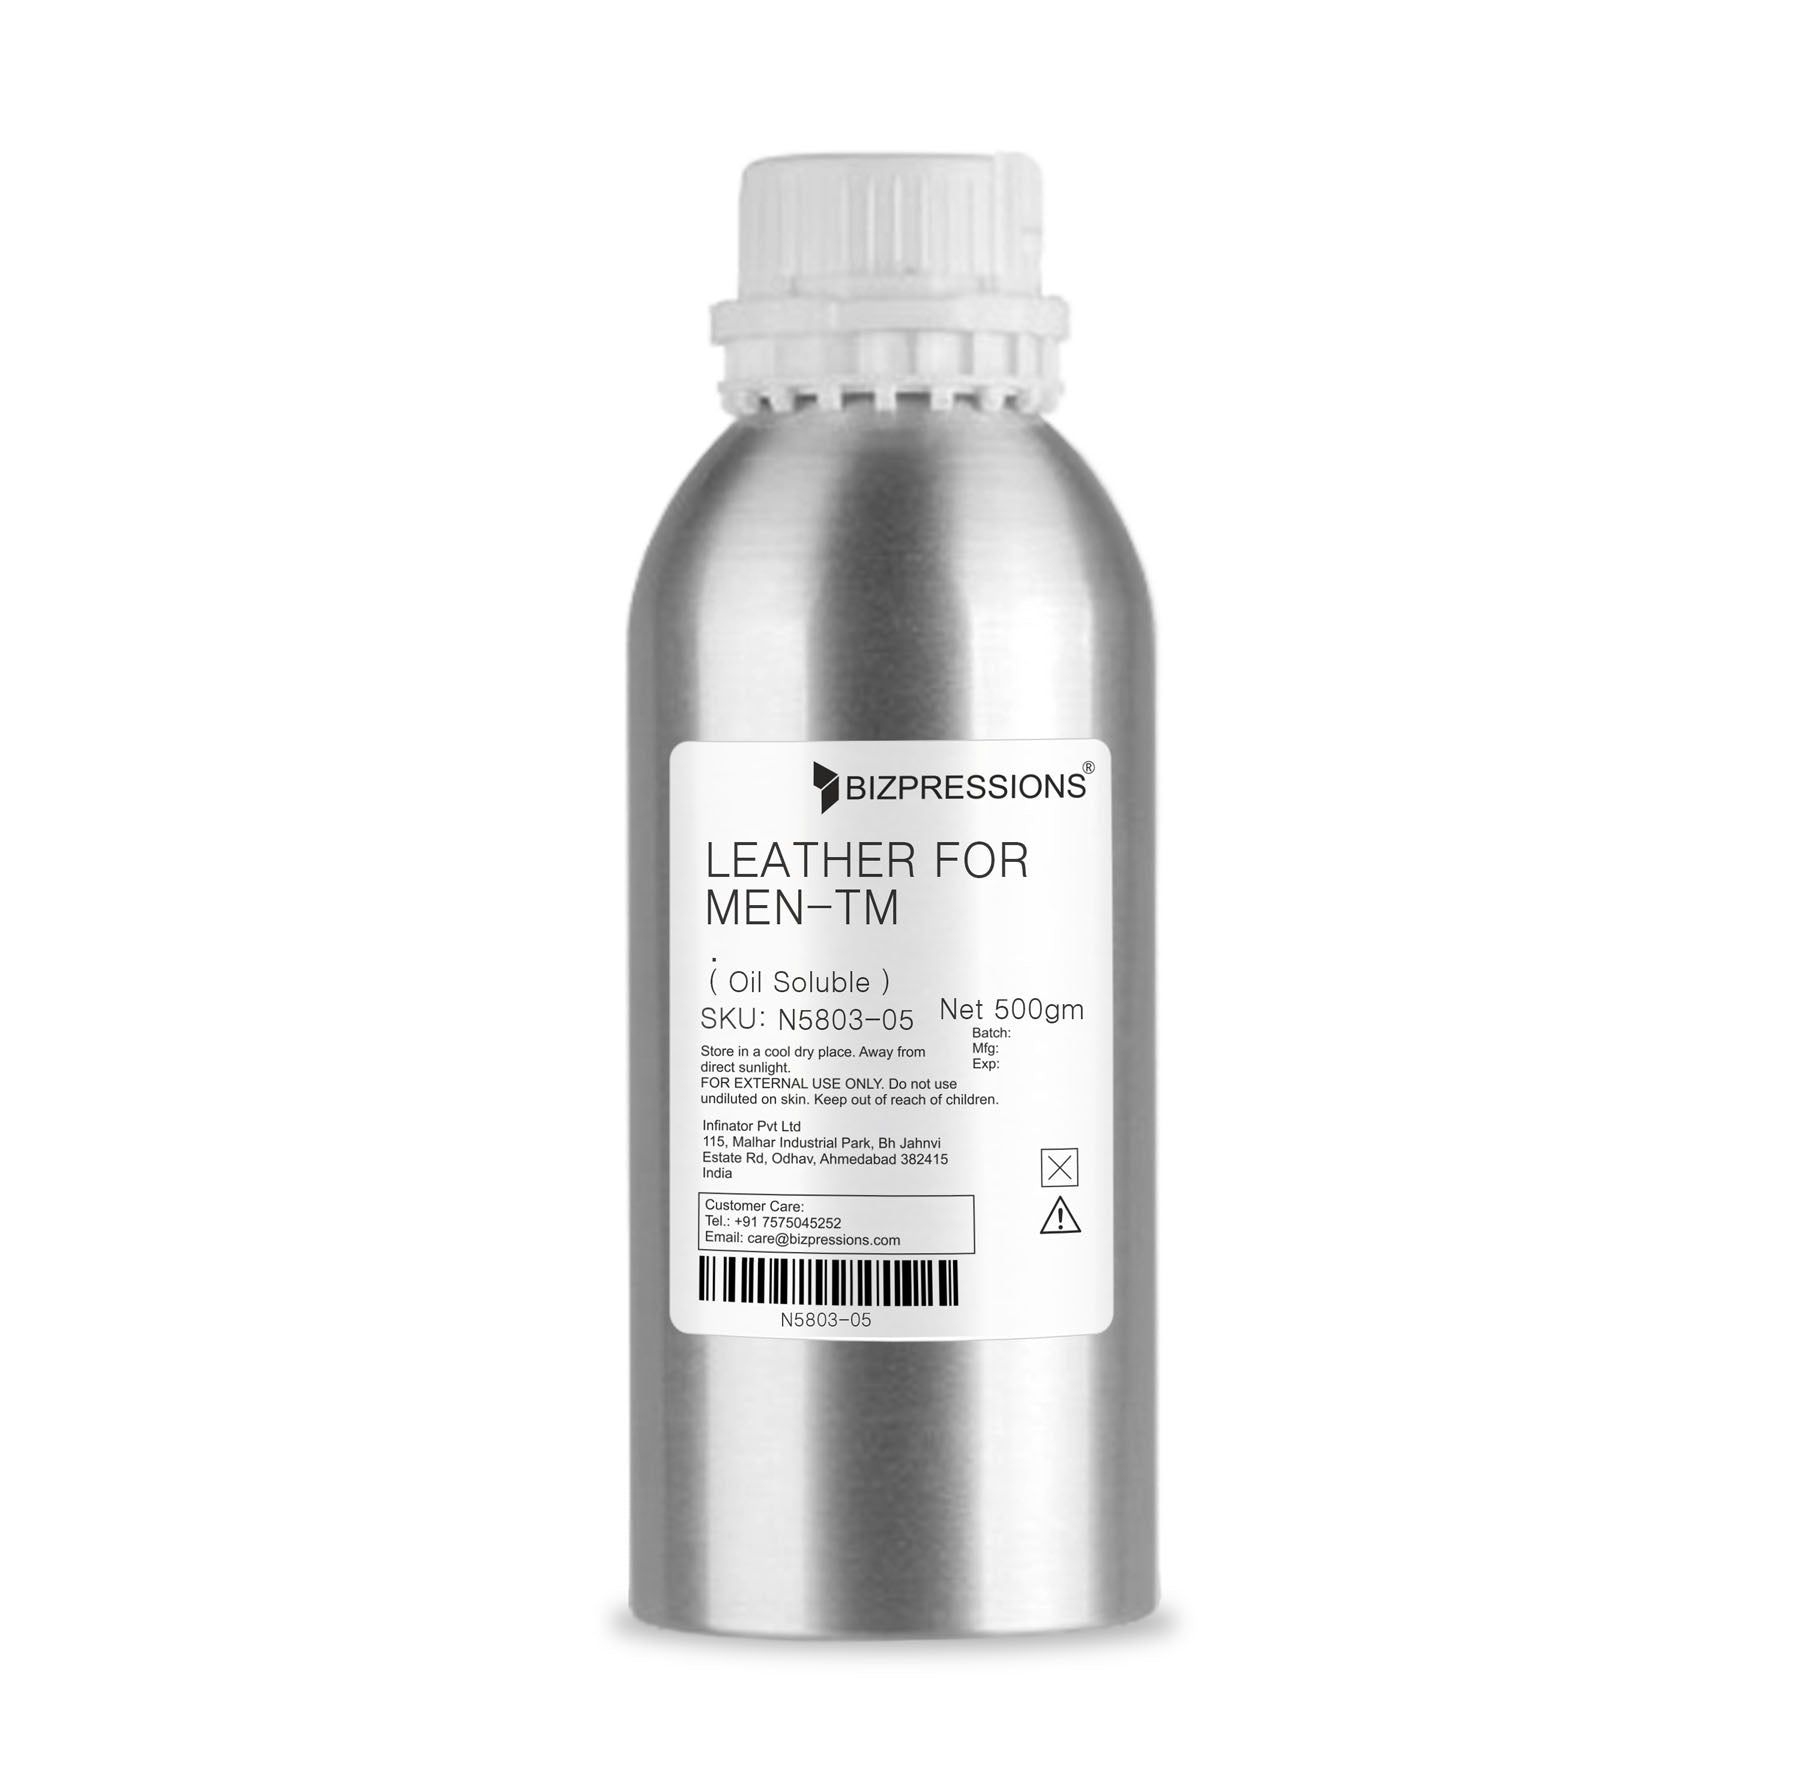 LEATHER FOR MEN-TM - Fragrance ( Oil Soluble ) - 500 gm